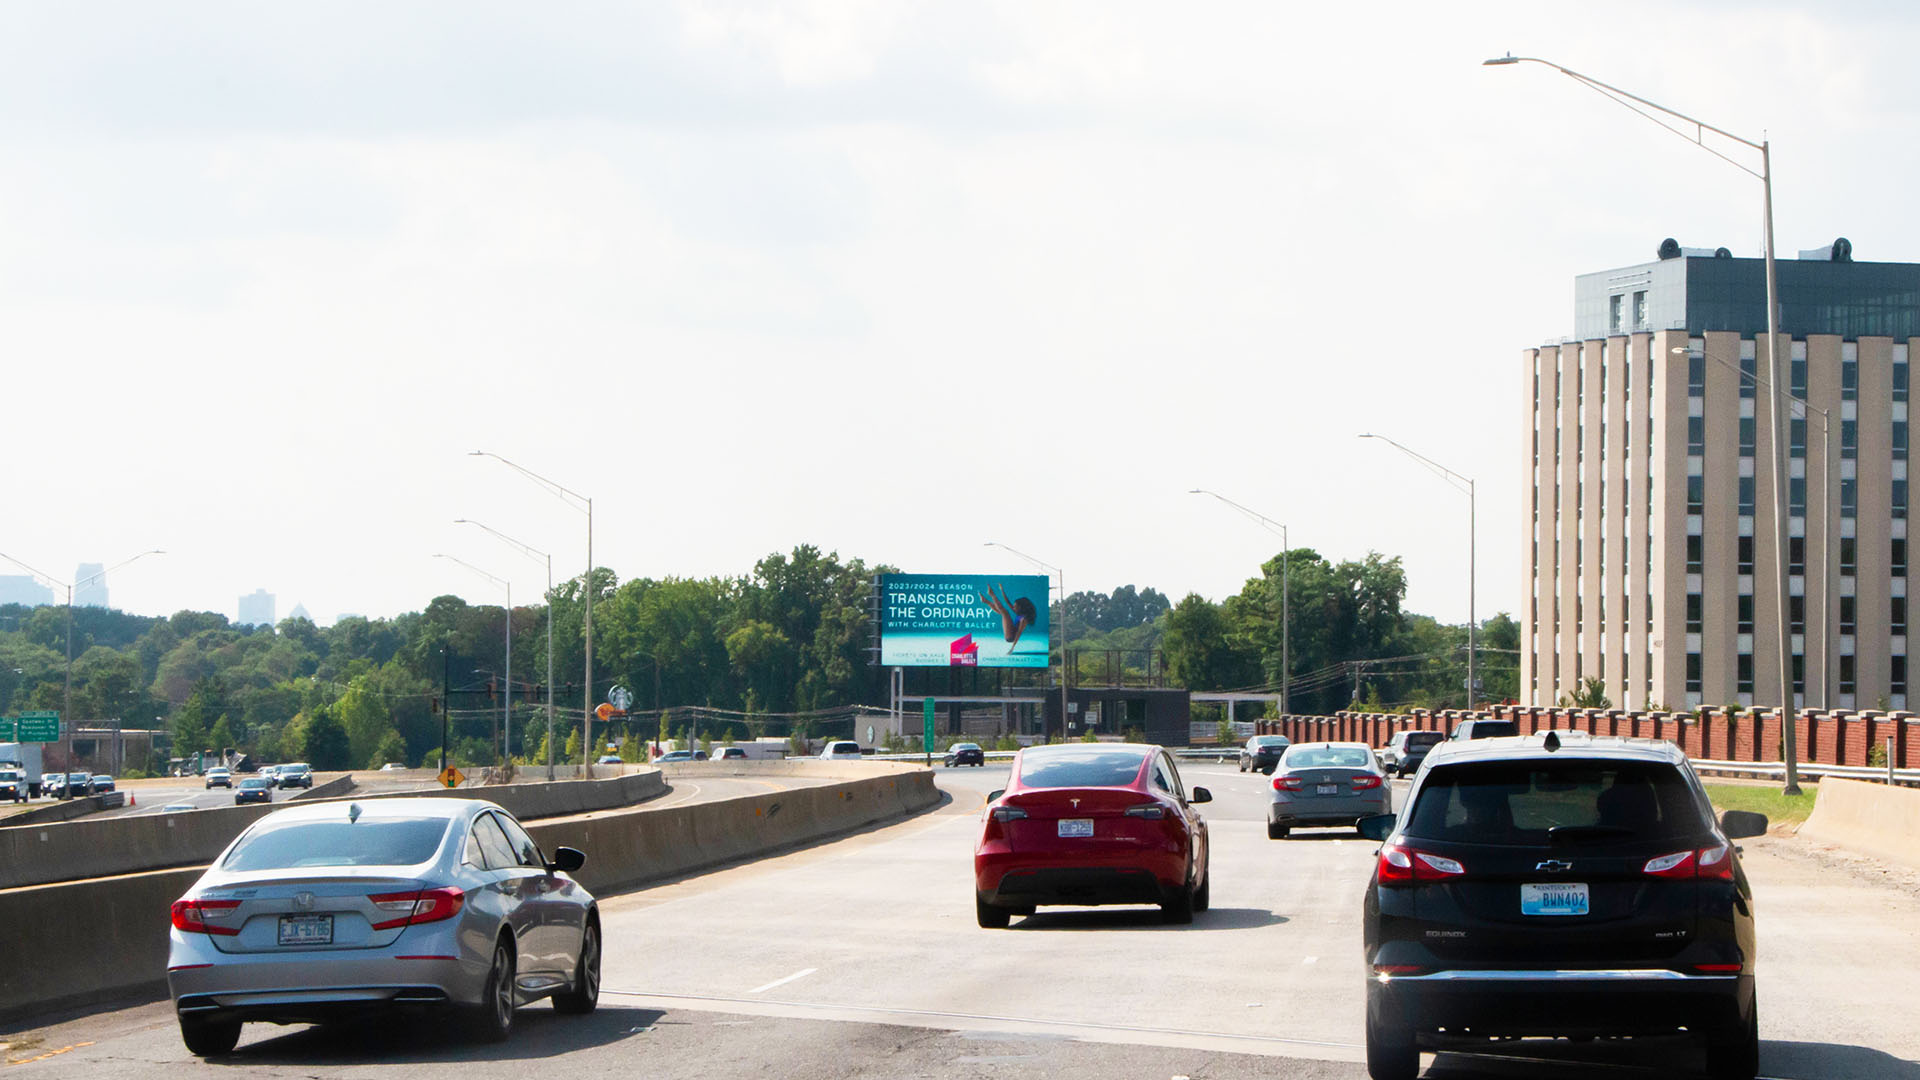 Inbound approach perspective of Independence Boulevard (US-74) Digital Billboard Display